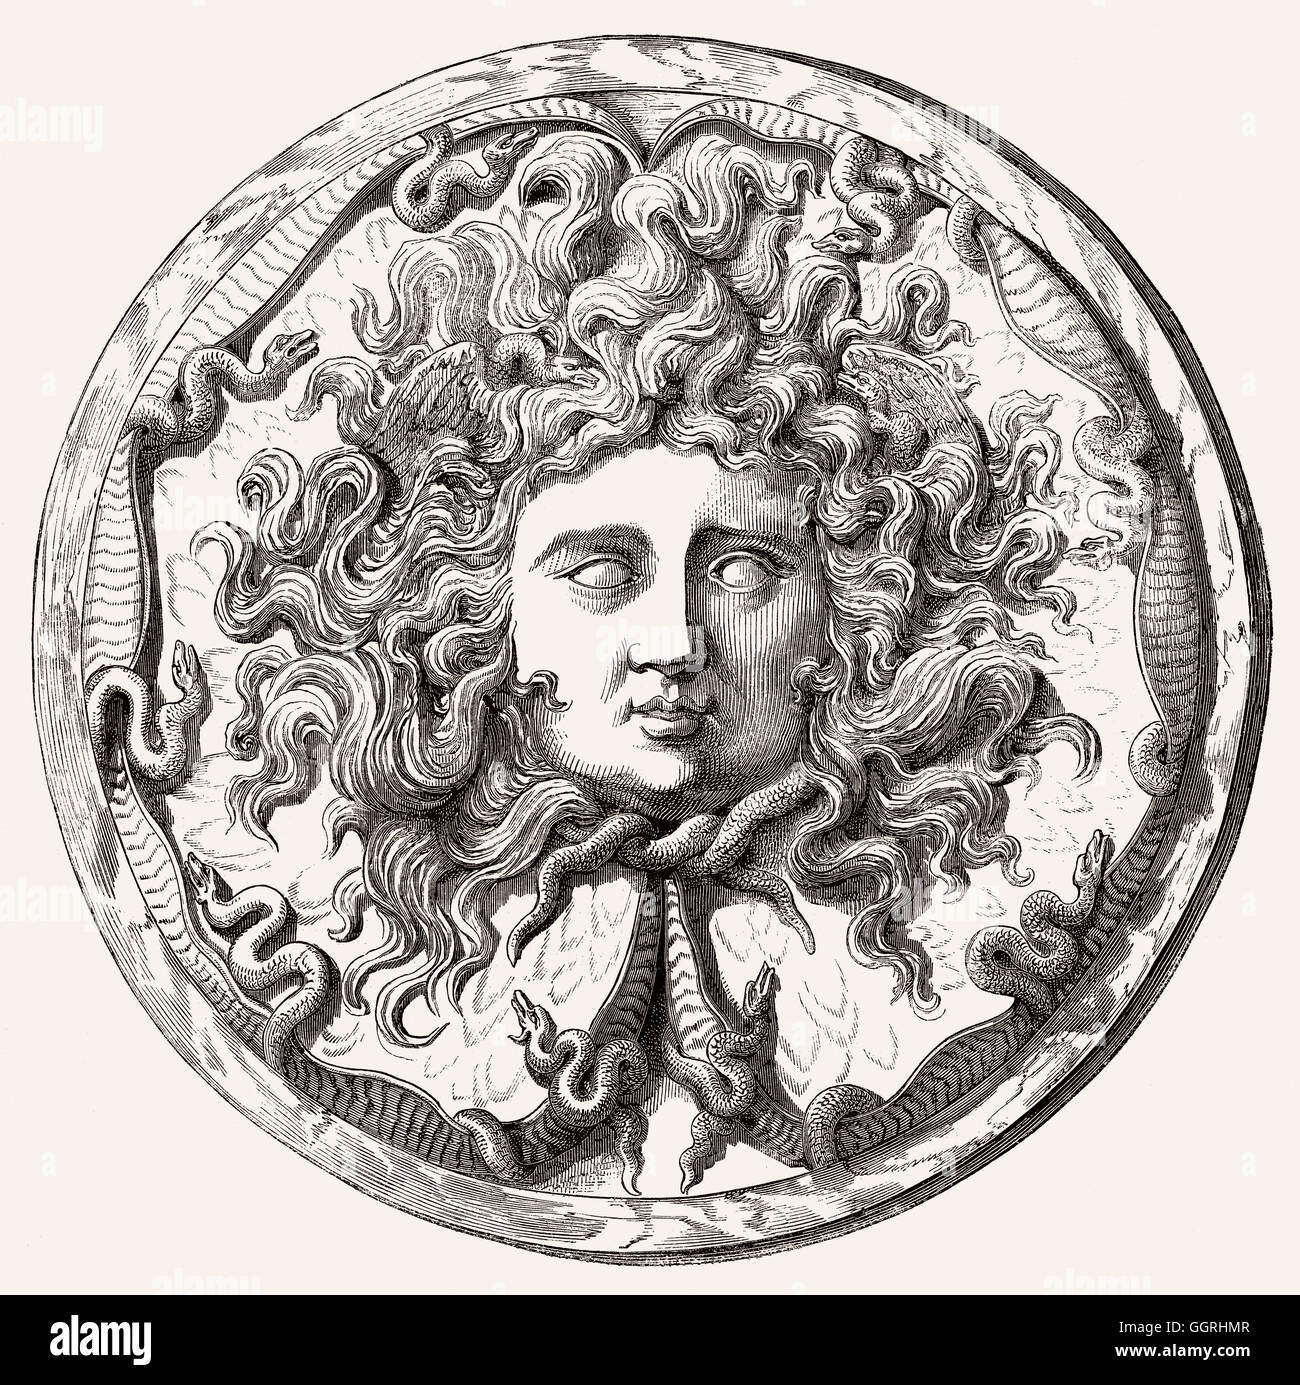 Greek Mythology Artistic Medusa Drawing.